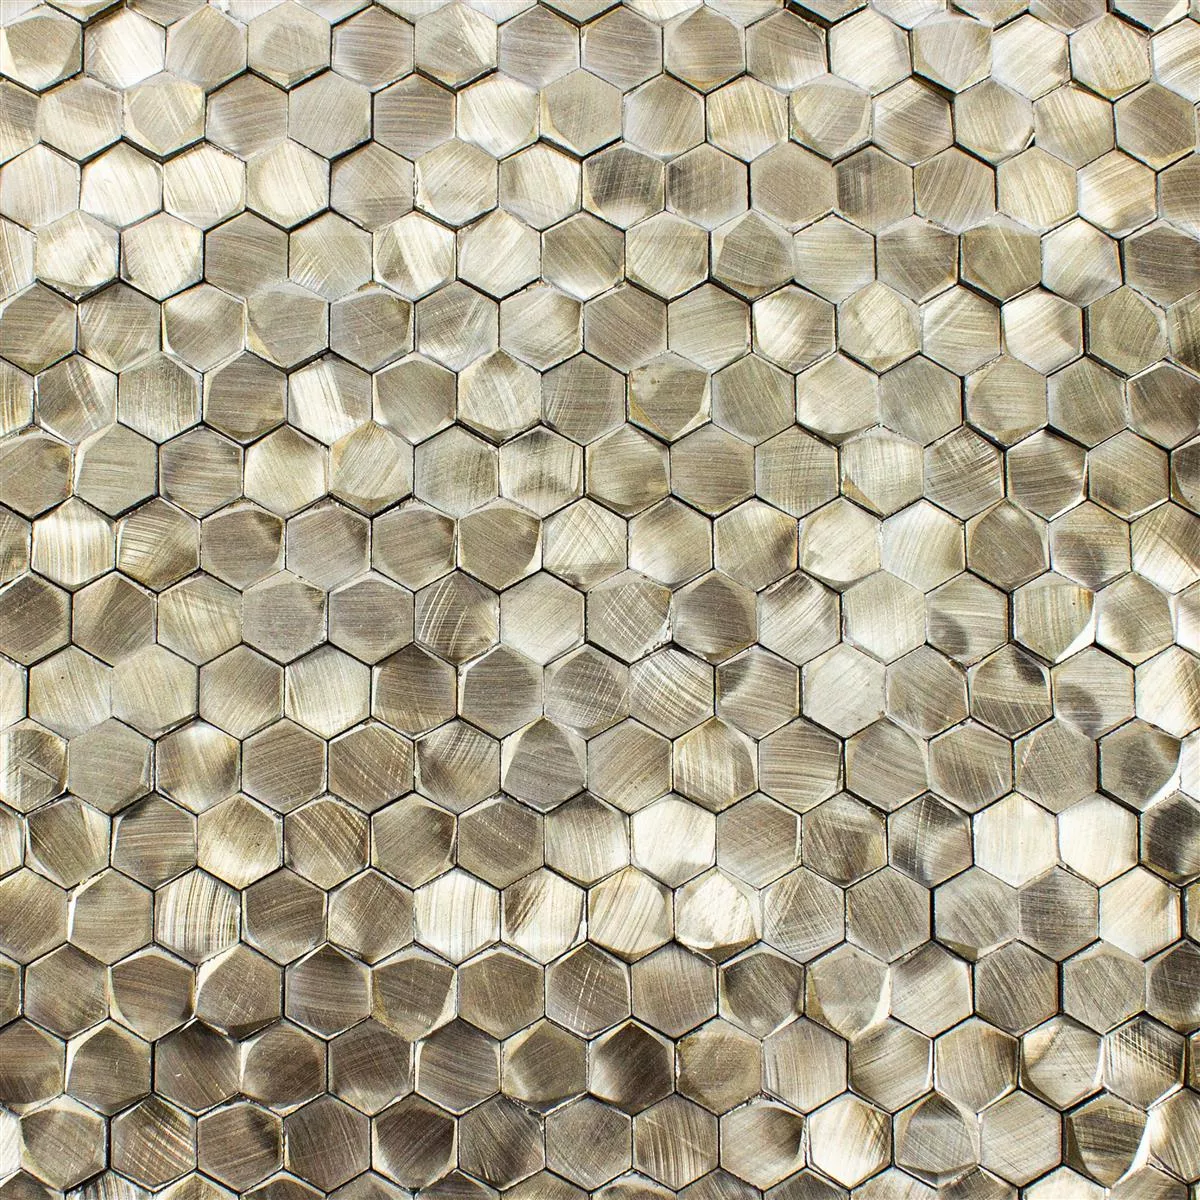 Auminio Metal Azulejos De Mosaico McAllen Oro